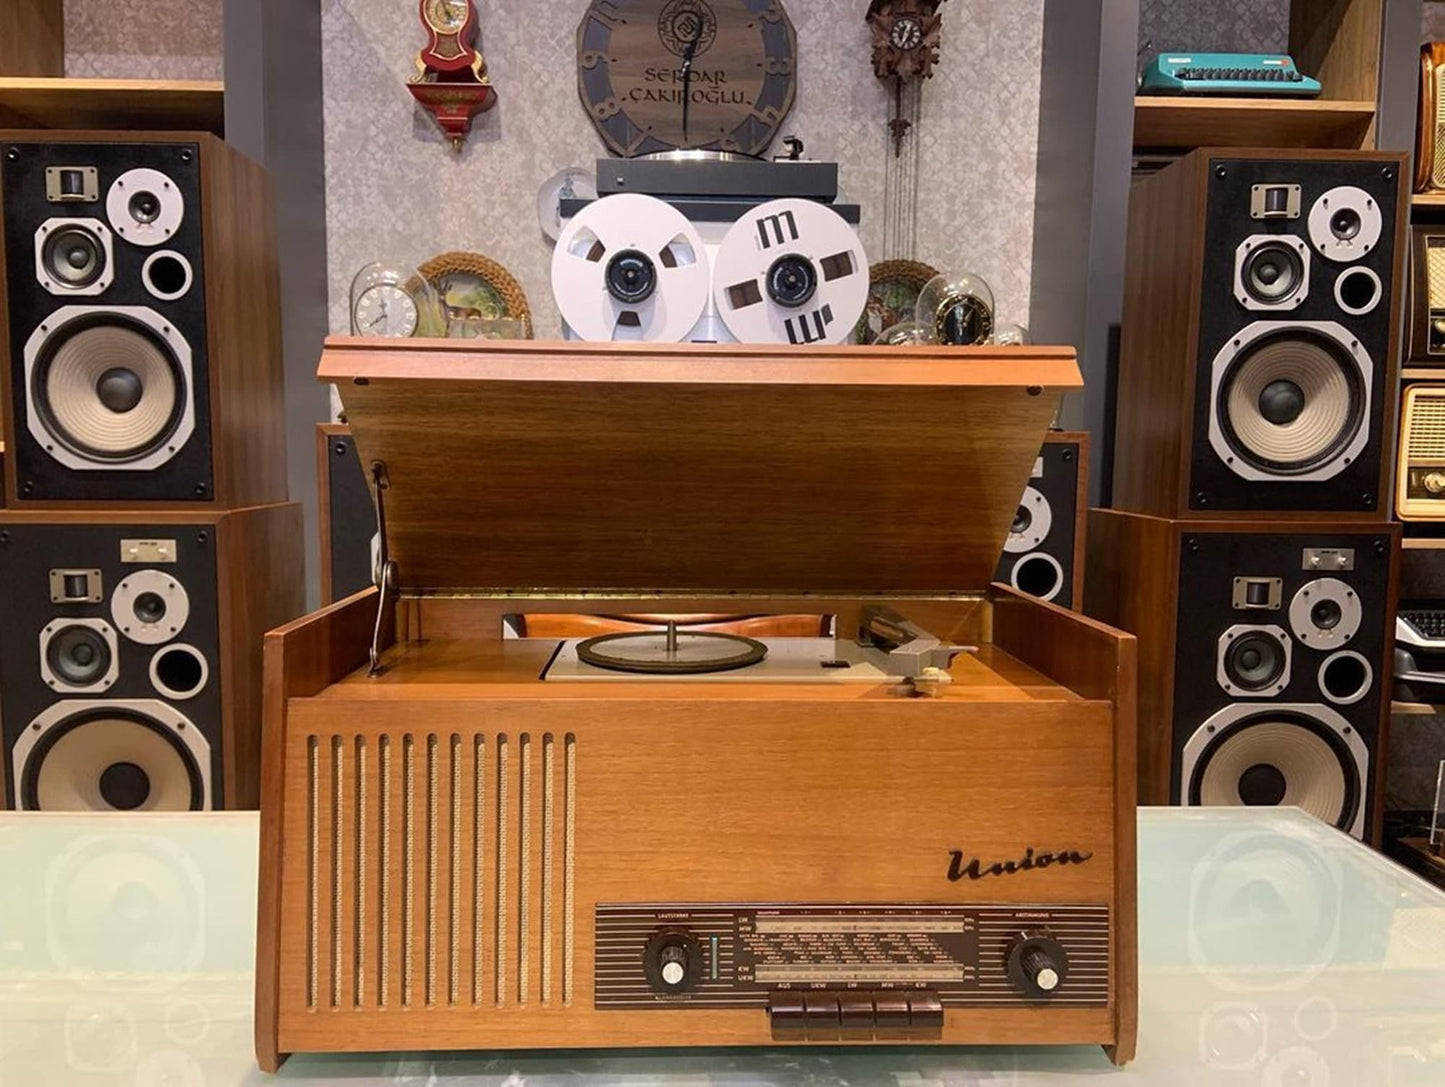 Germany Union Lamp Radio With Pikap| Vintage Radio | Orjinal Old Radio | Radio | Lamp Radio |, Turntable